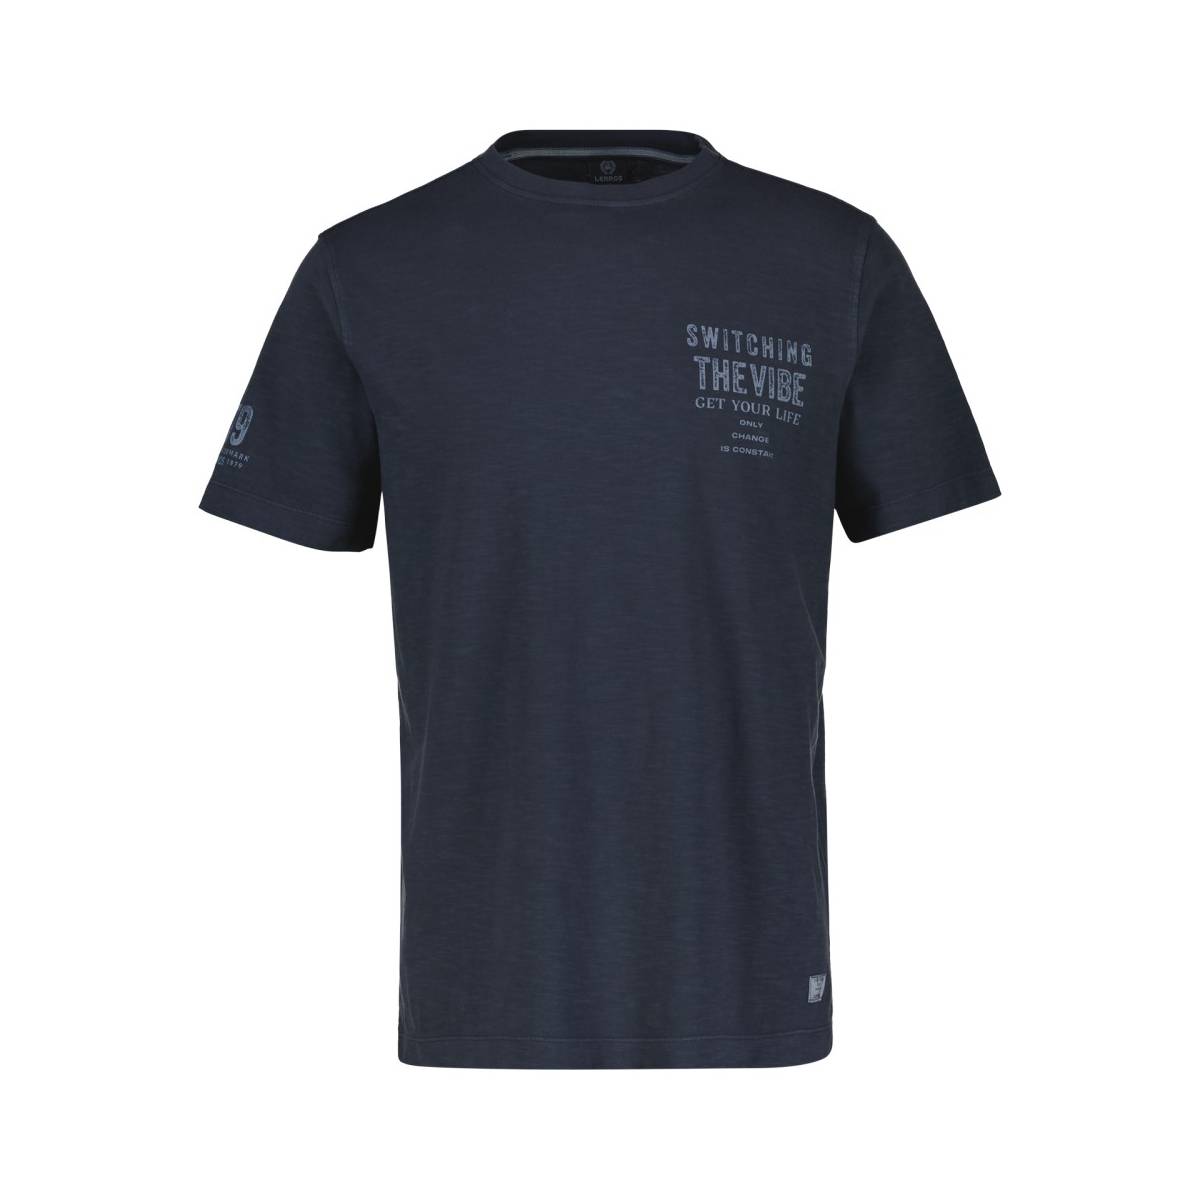 LERROS  t shirts donker blauw -  model 2443042 - Herenkleding t shirts blauw